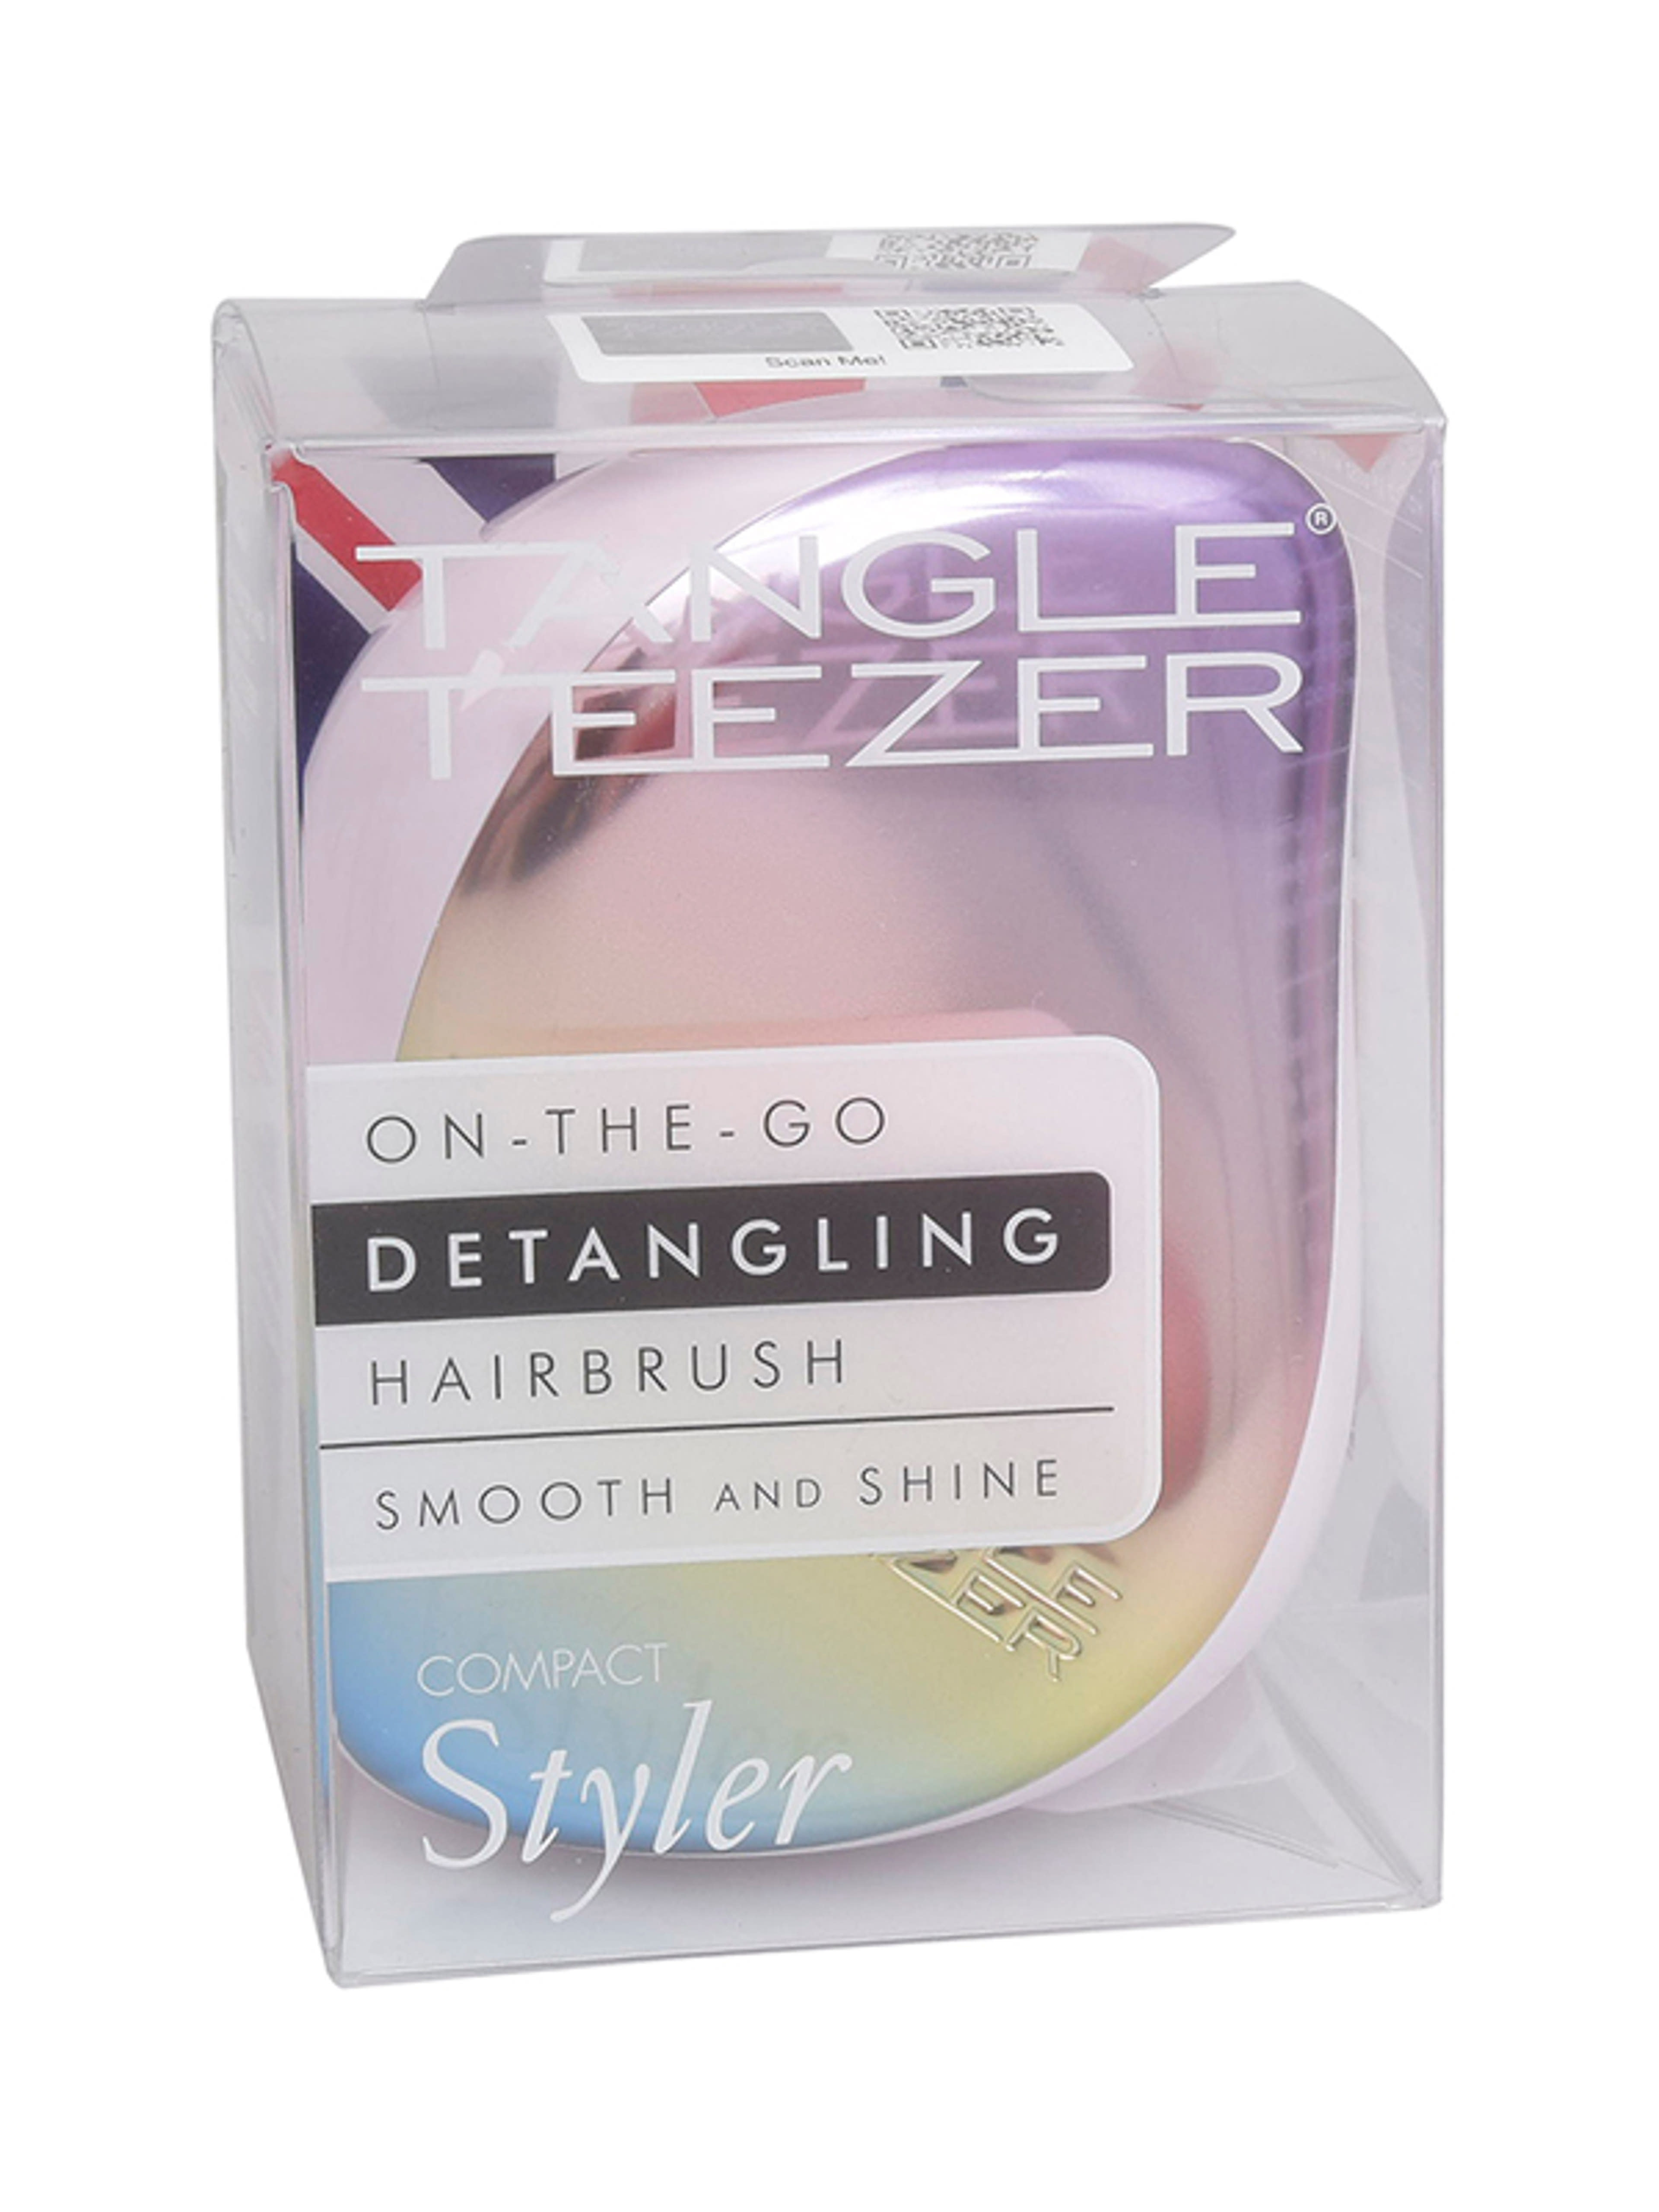 Tangle teezer compact styler holo rainbow - 1 db-1